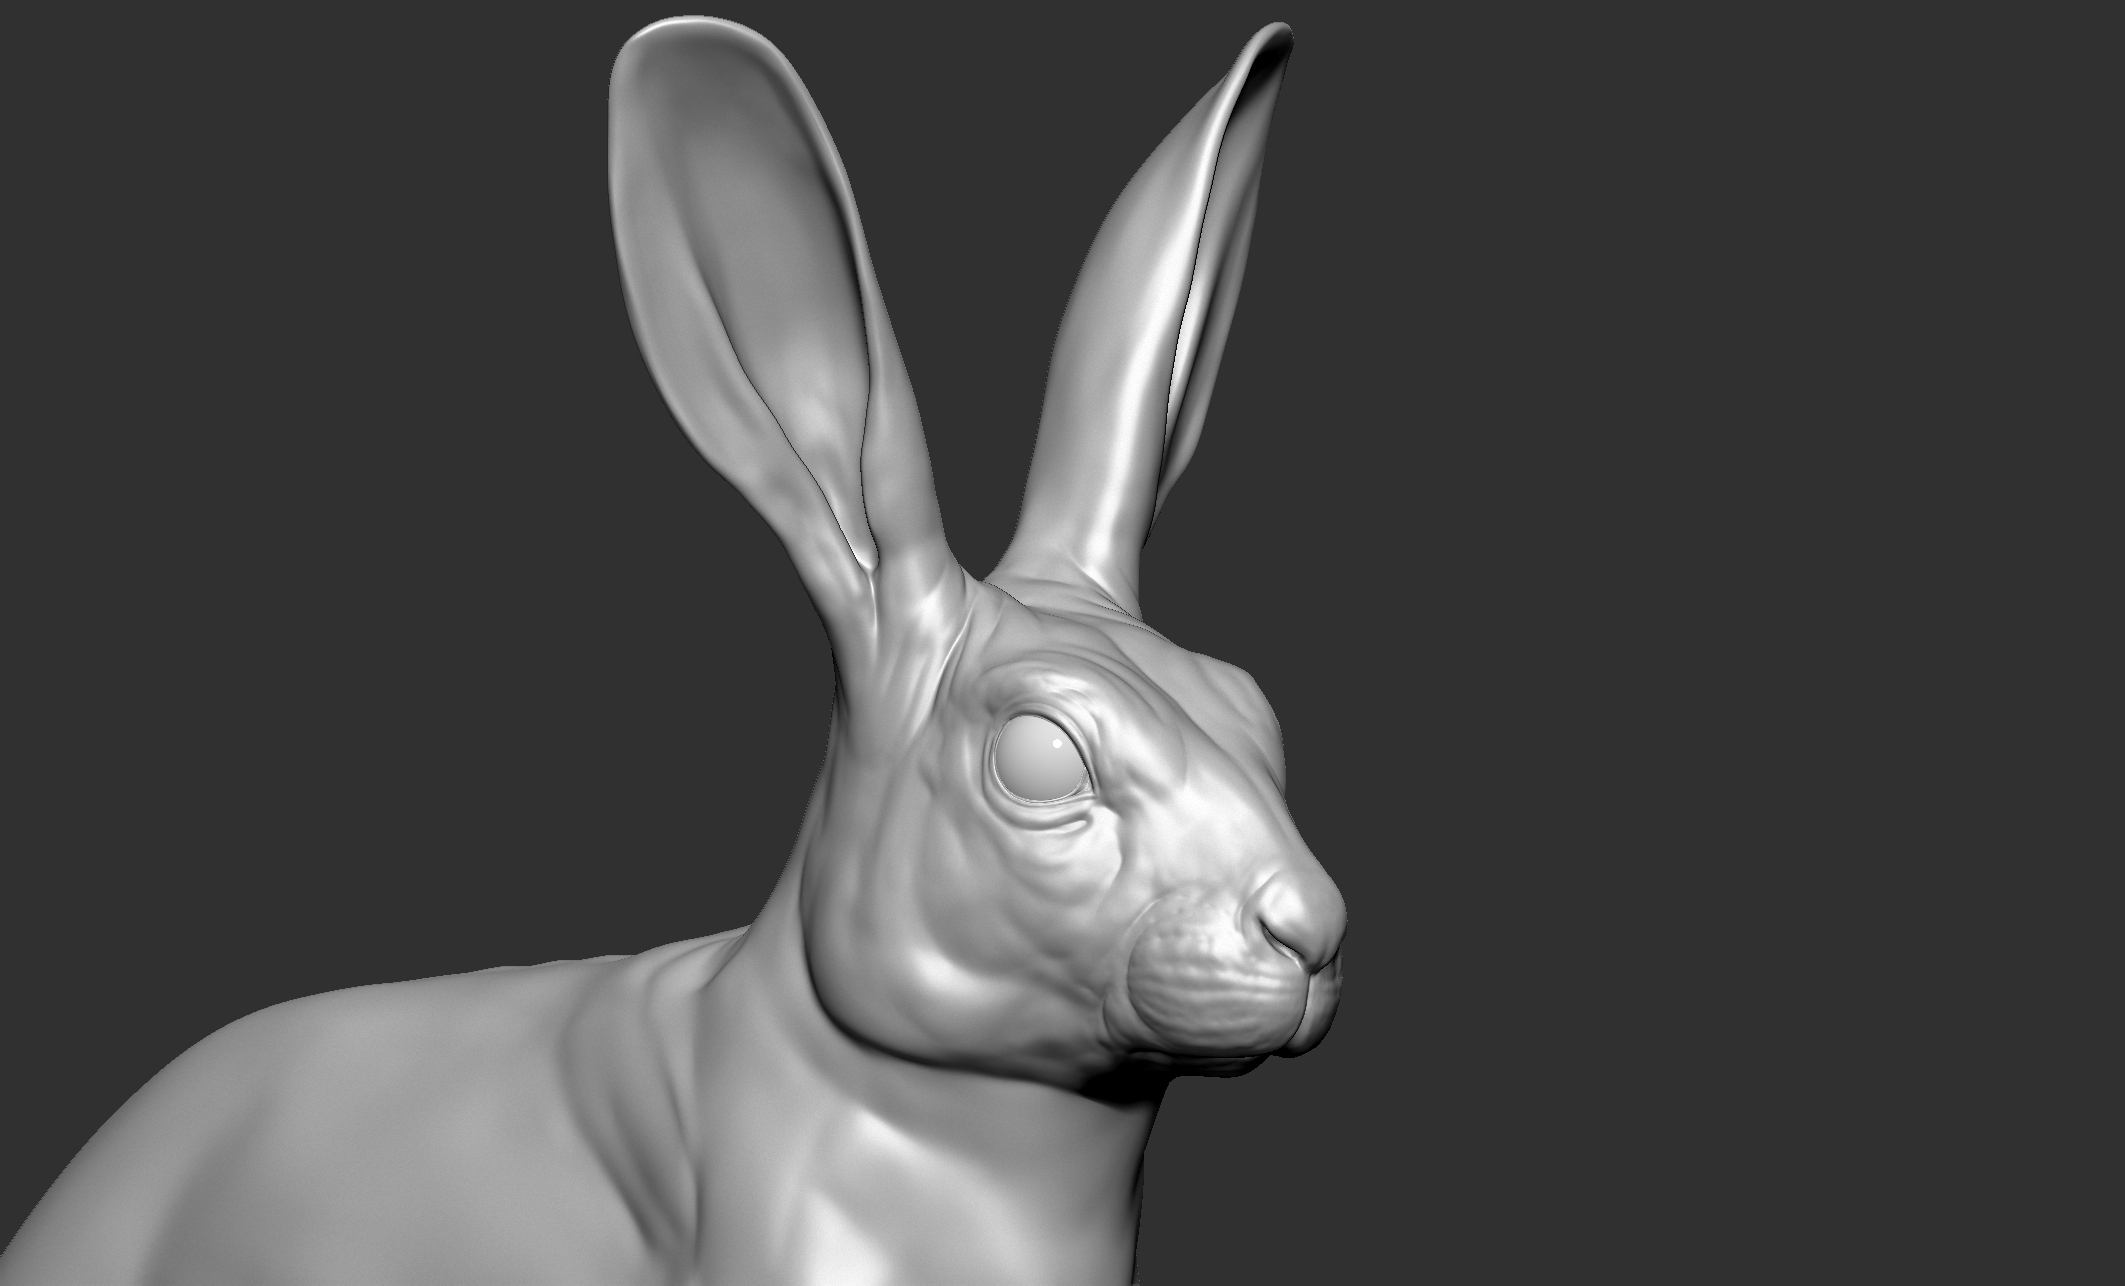 zbrush create hare with insert mesh